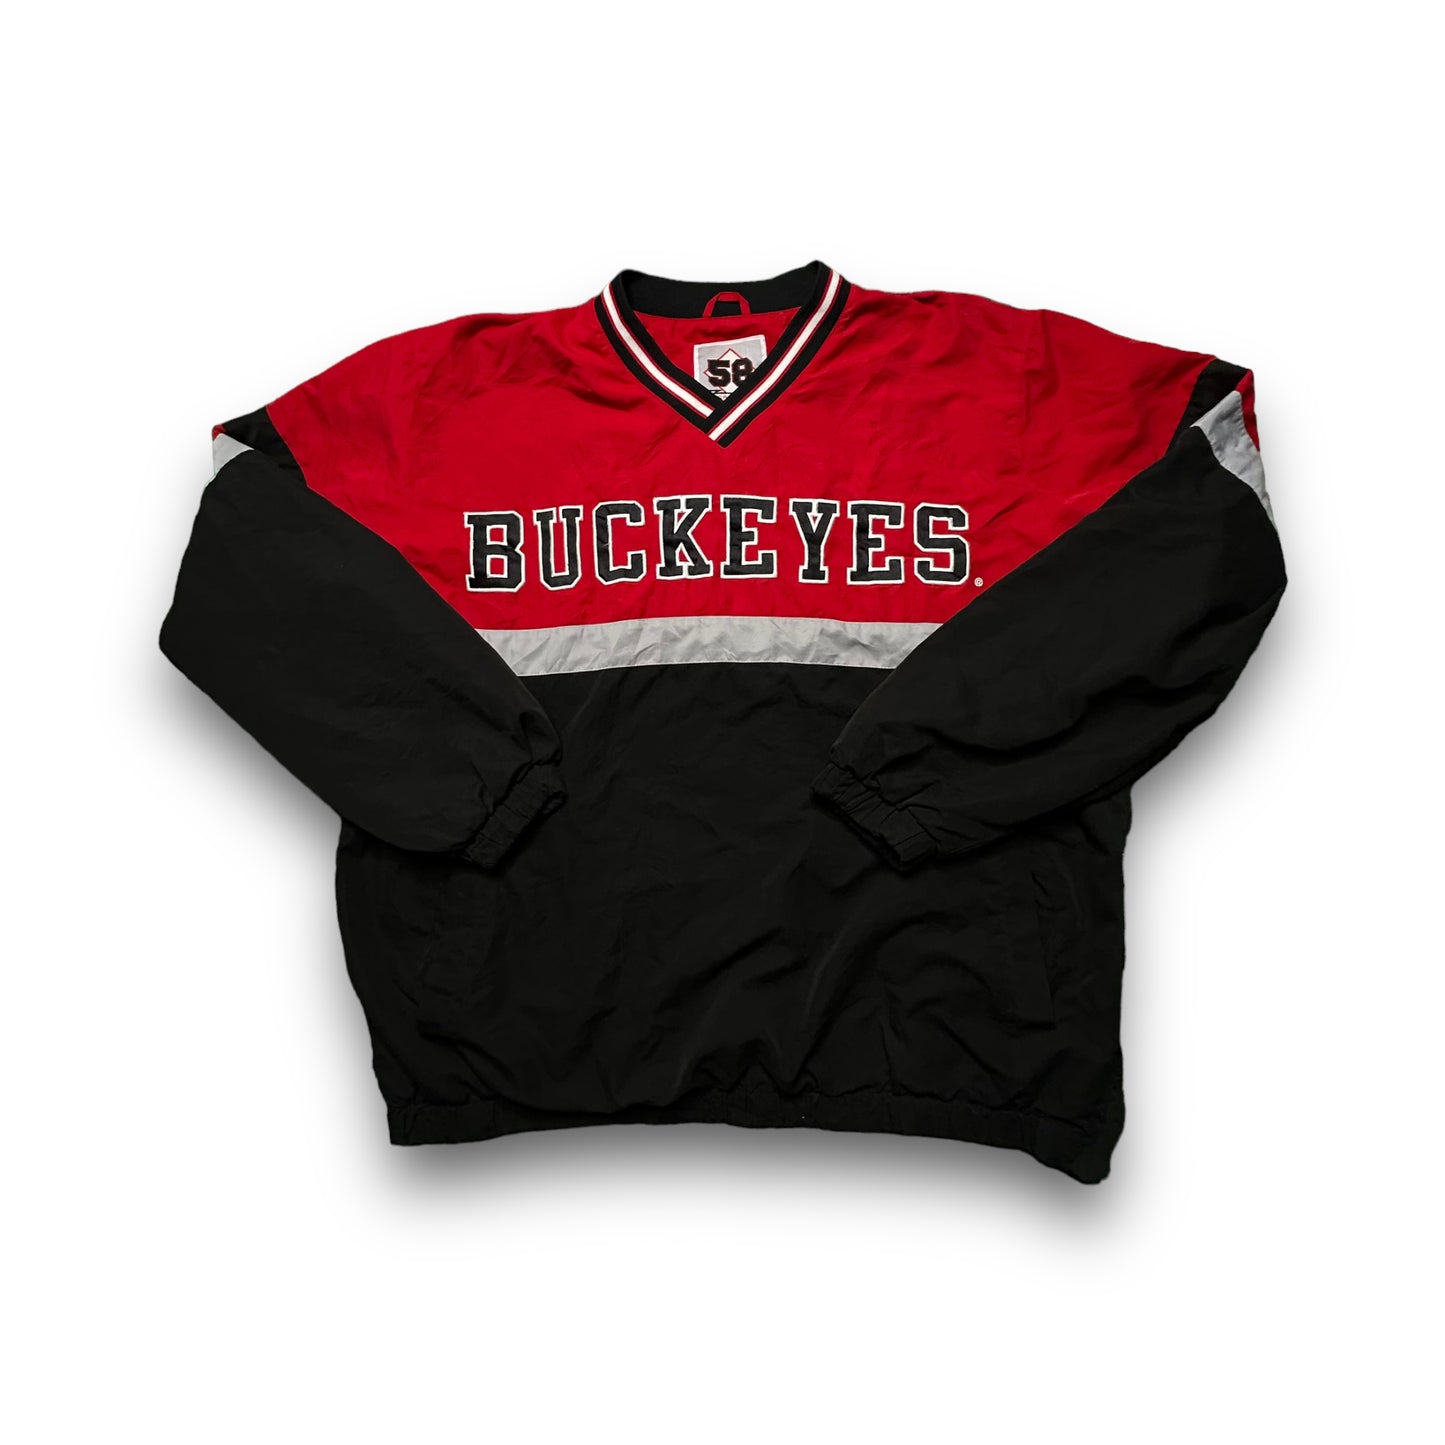 00s Ohio State Buckeyes Crewneck (XL)